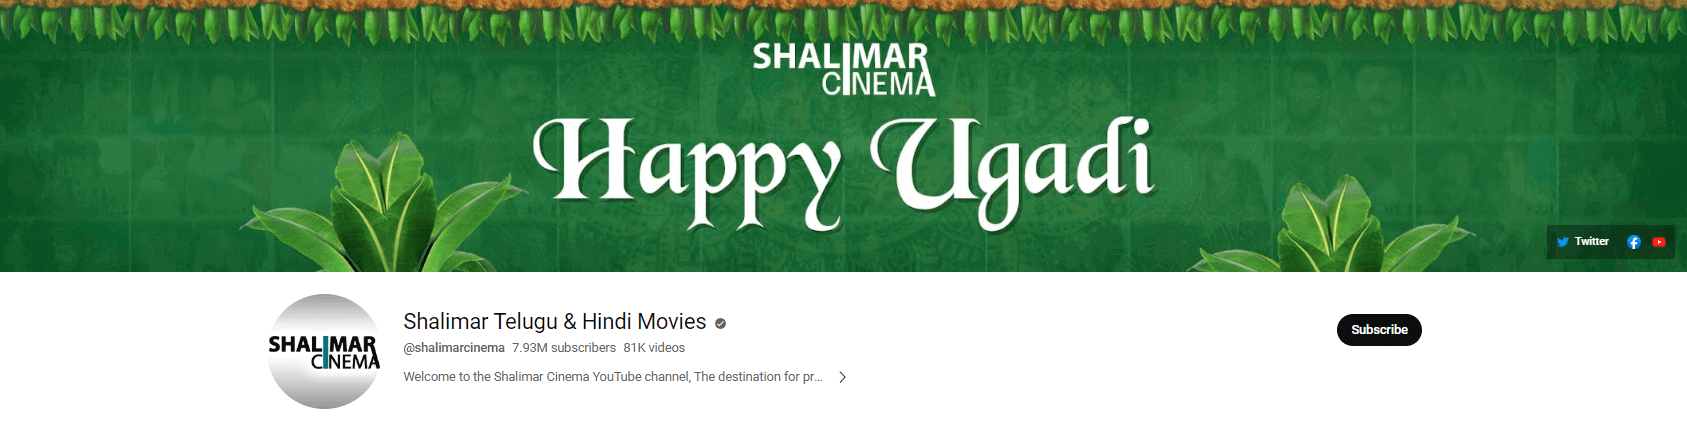 Shalimar Cinema YouTube Channels for Hindi Movie